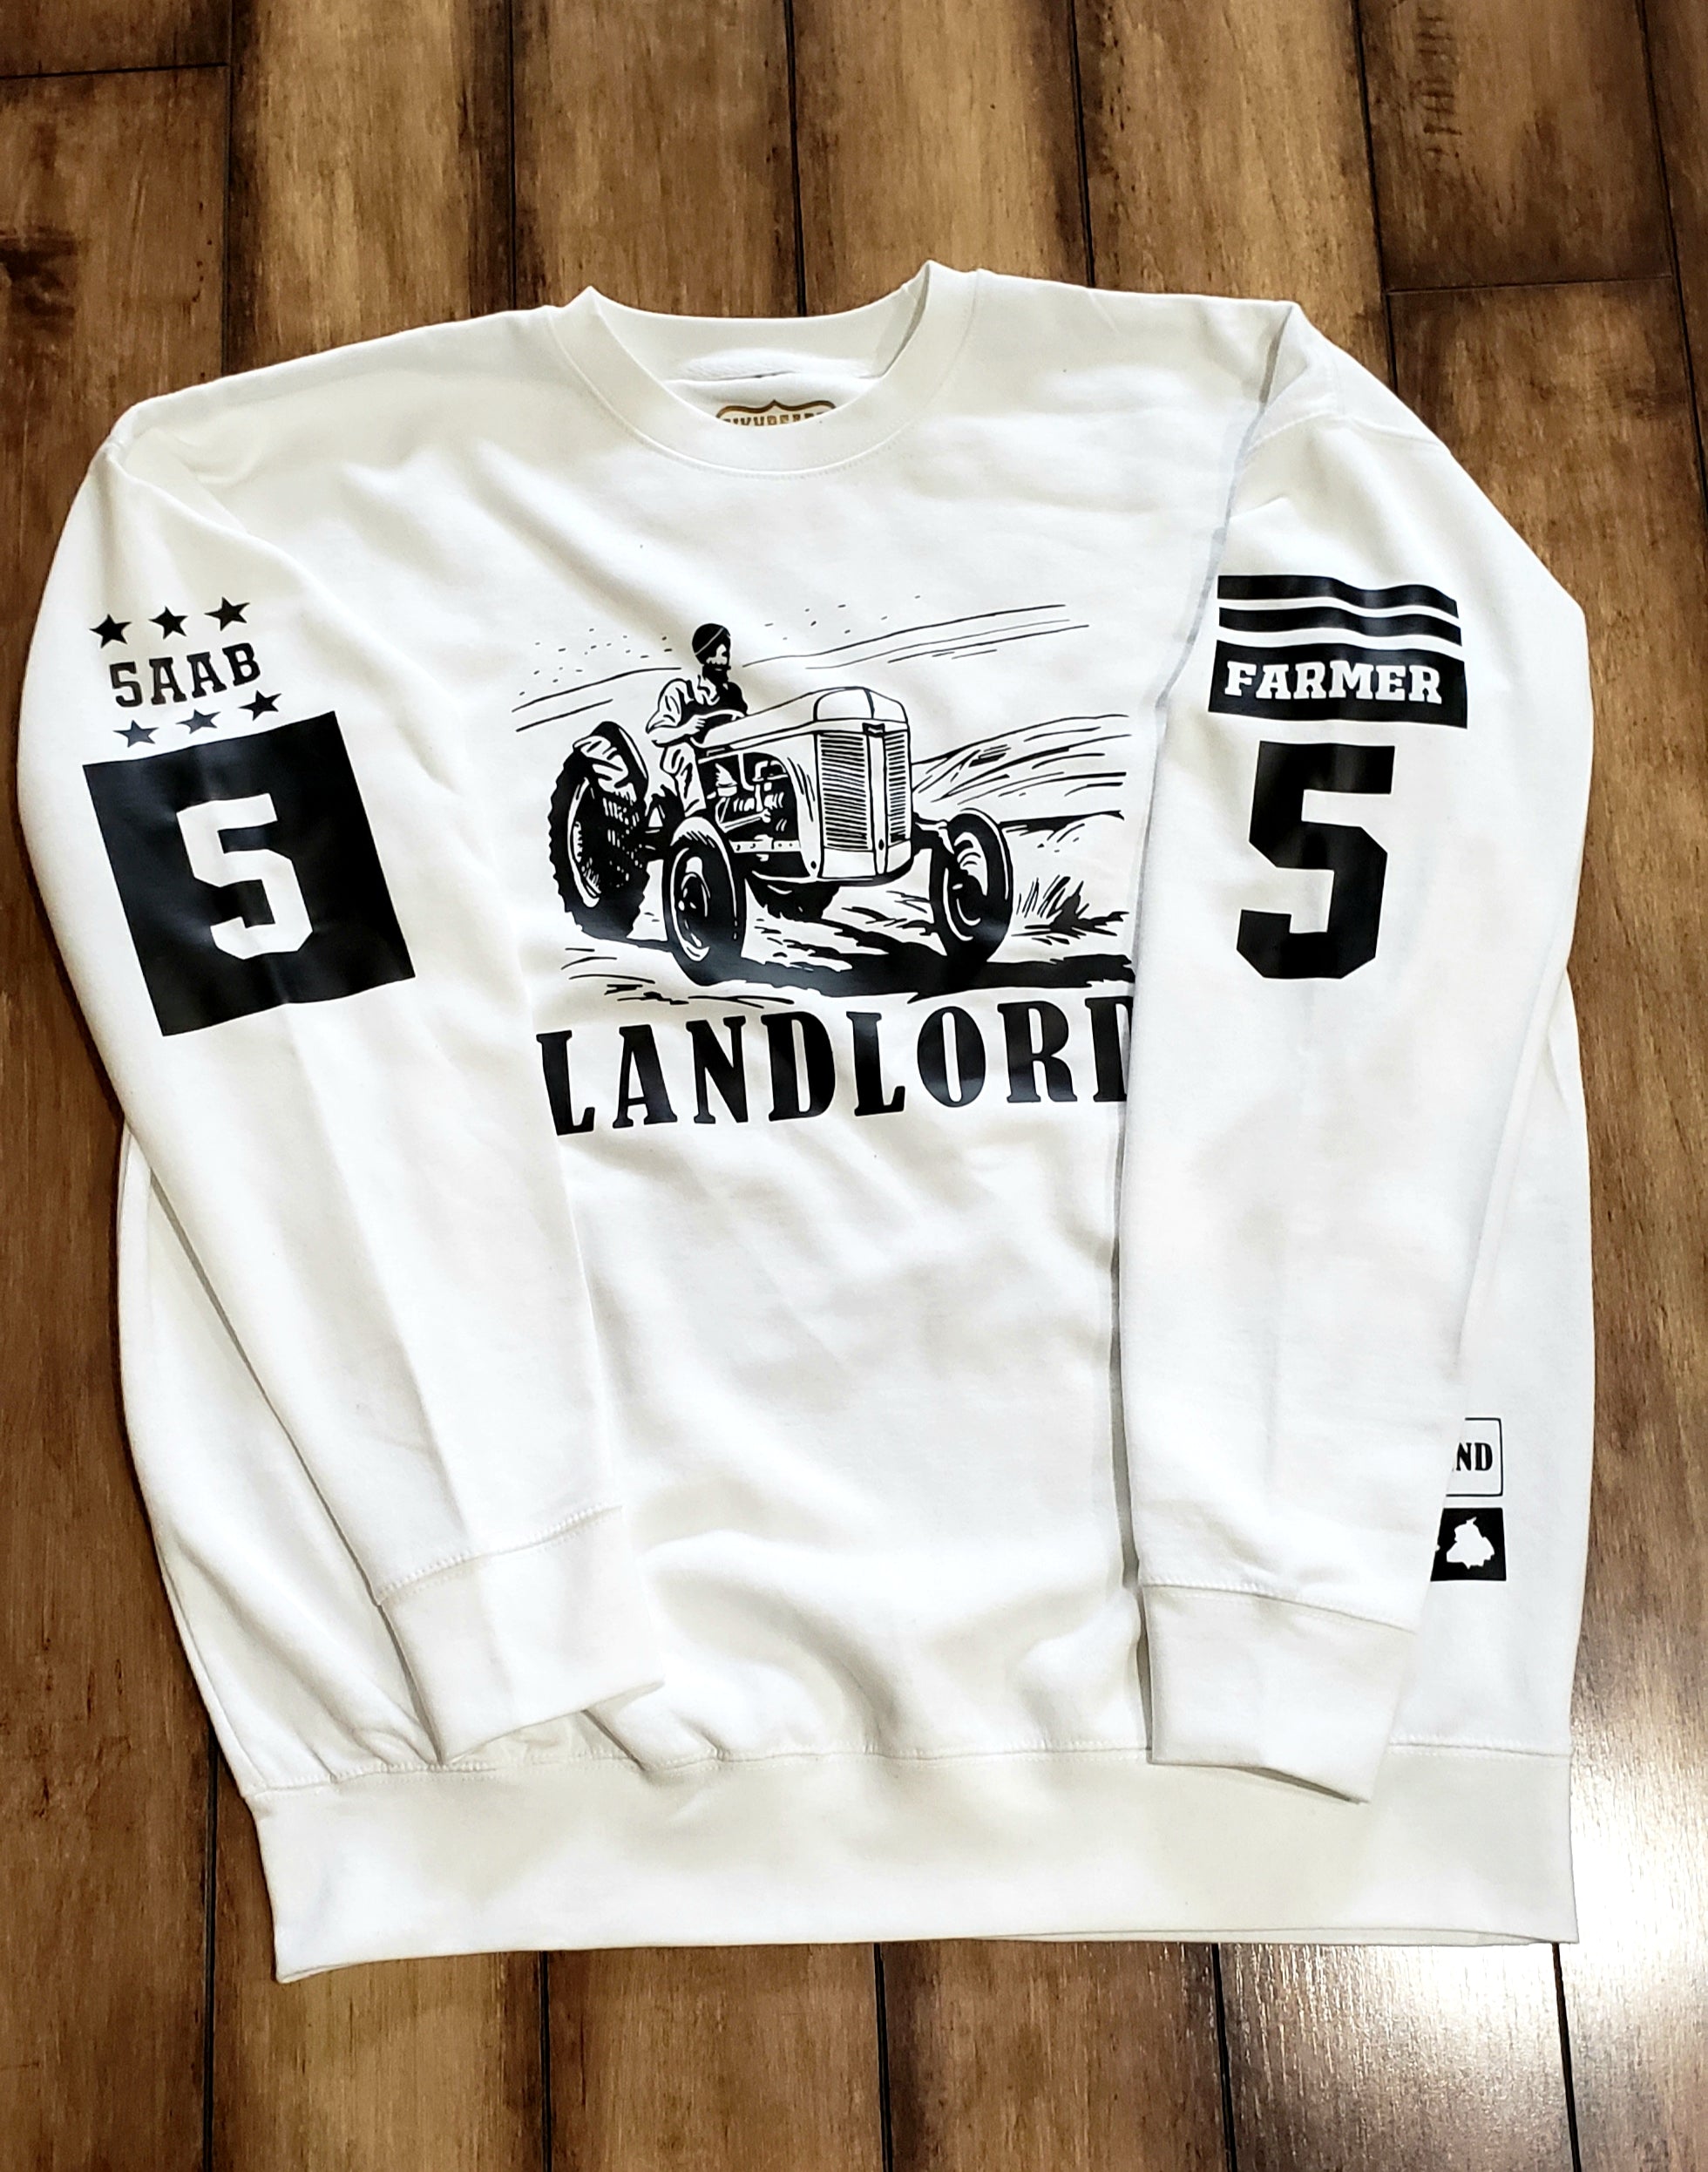 Landlord - Crew neck Sweatshirt